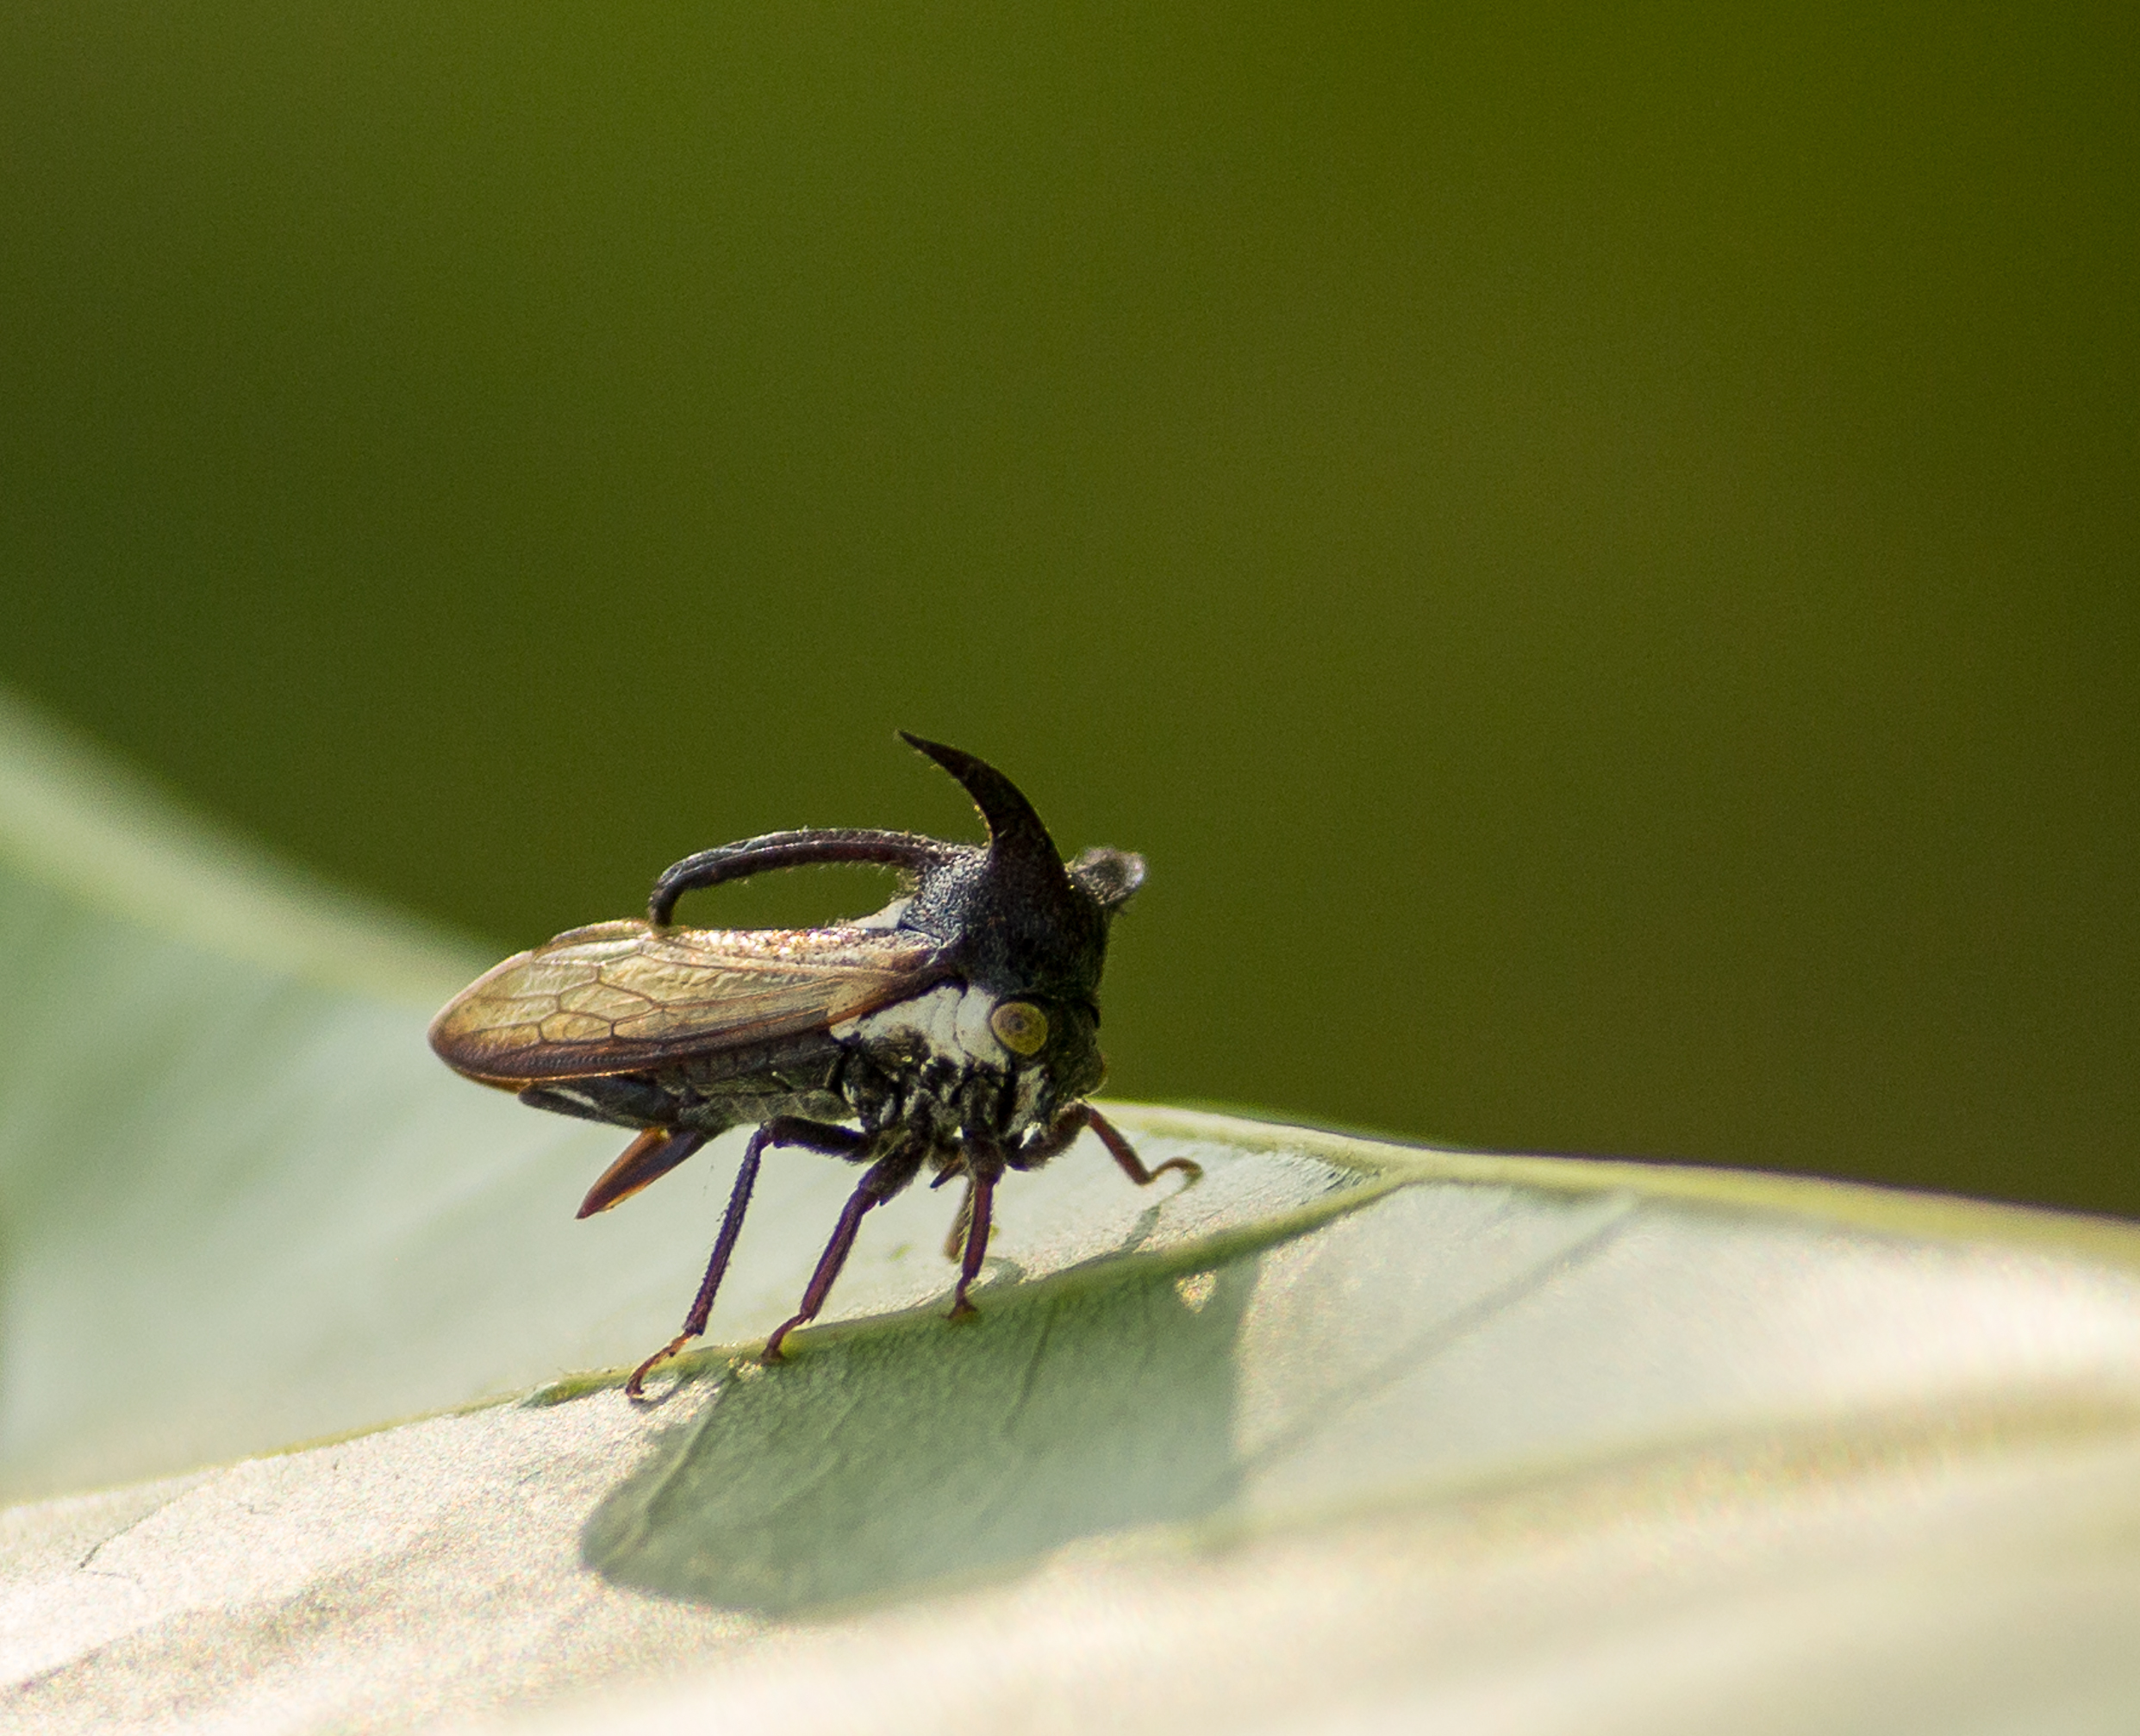 Longhorn beetle sitting on a leaf